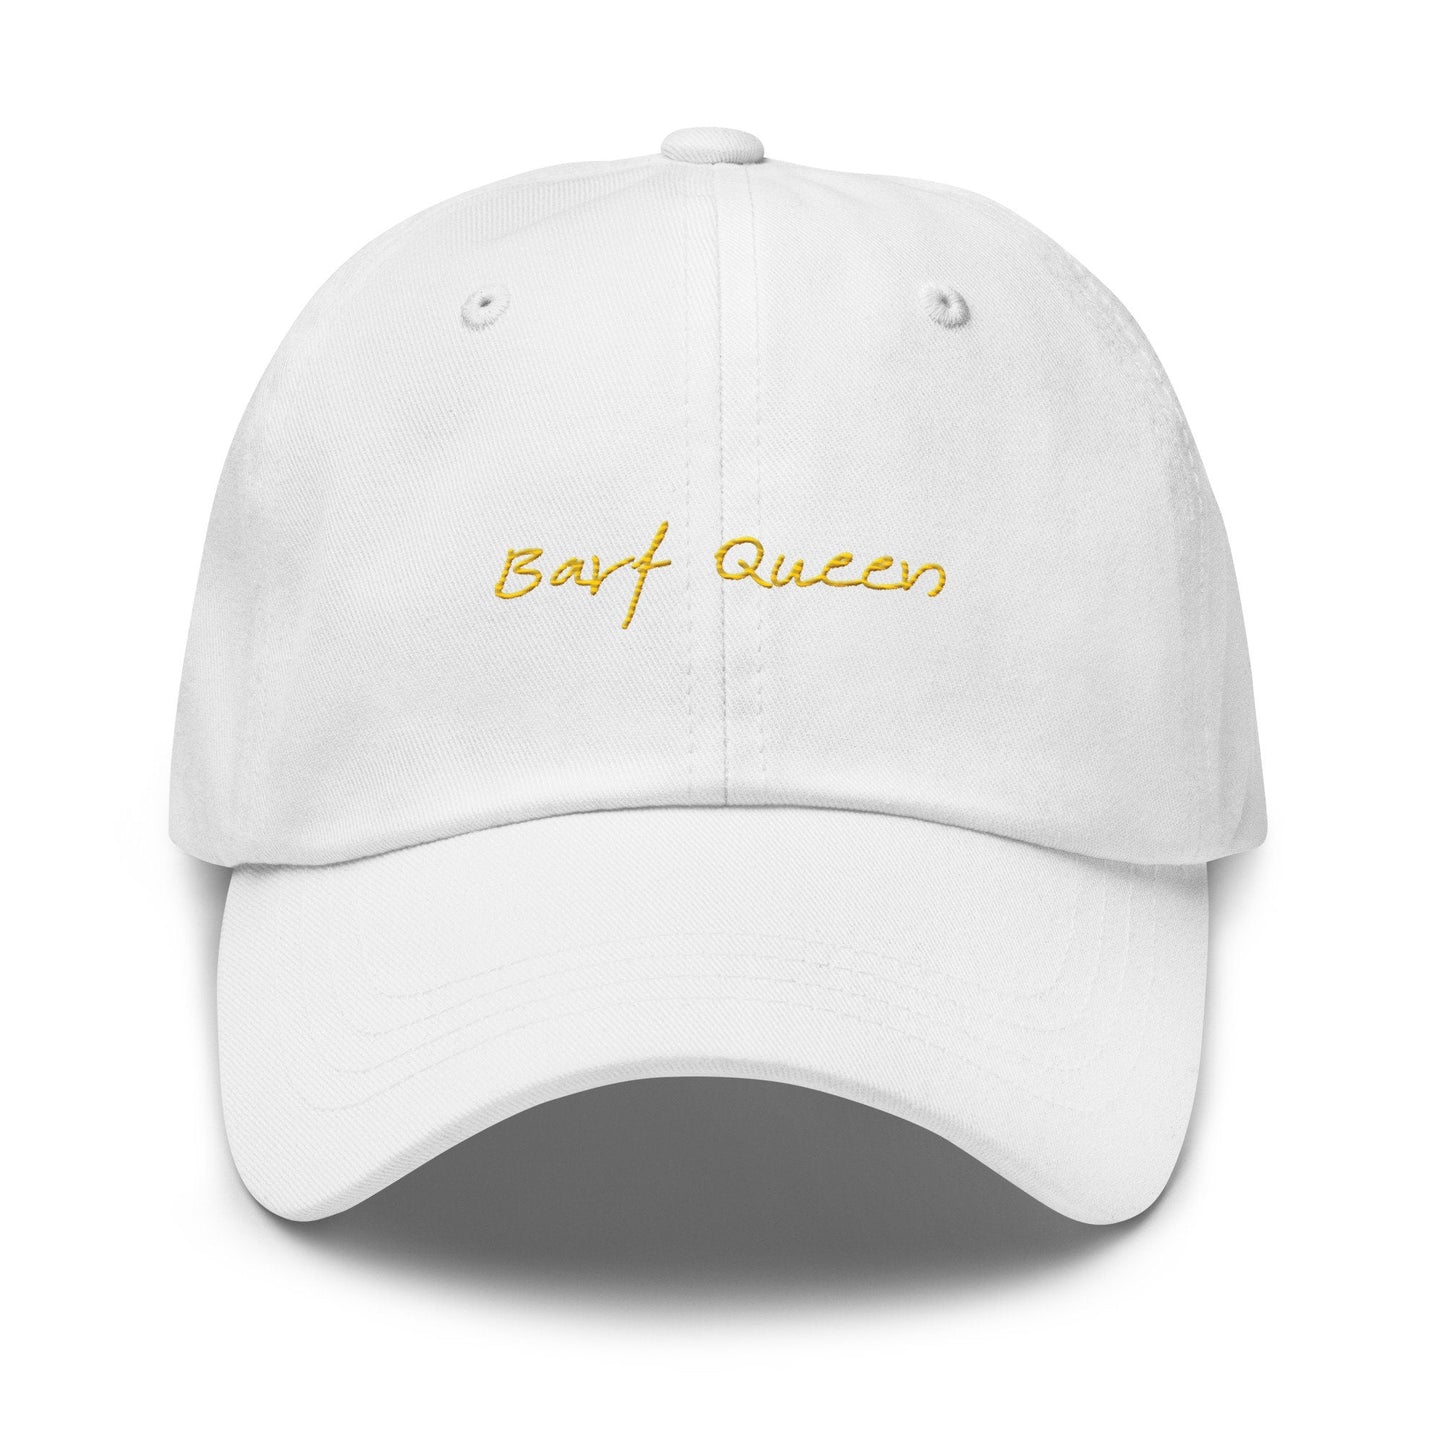 Barf Queen Hat - Funny Gift for Sensitive Tummy Baddies - Minimalist Cotton Embroidered Cap - Evilwater Originals